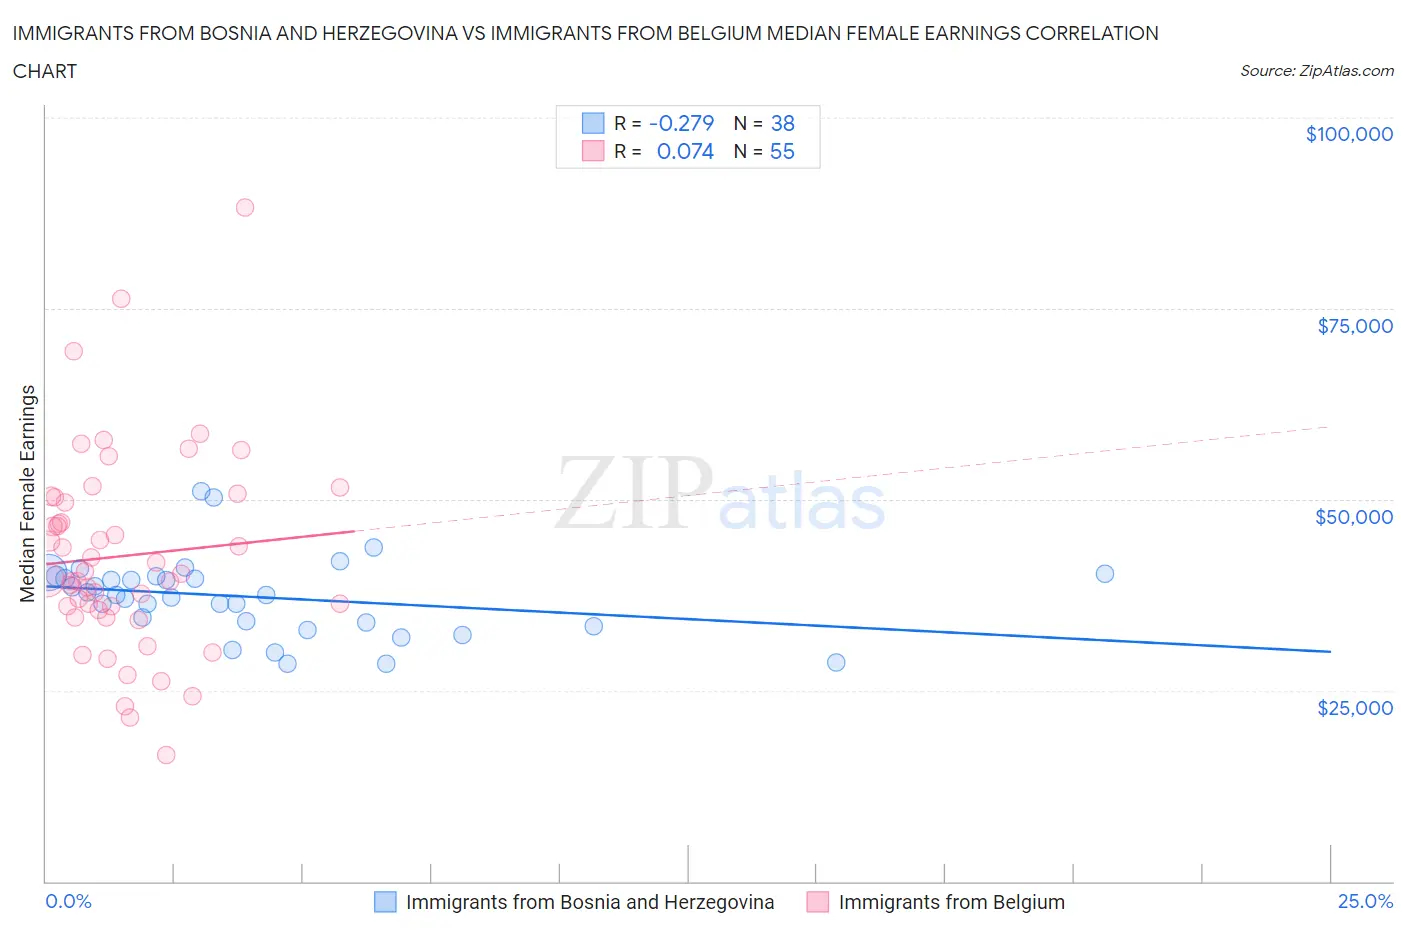 Immigrants from Bosnia and Herzegovina vs Immigrants from Belgium Median Female Earnings